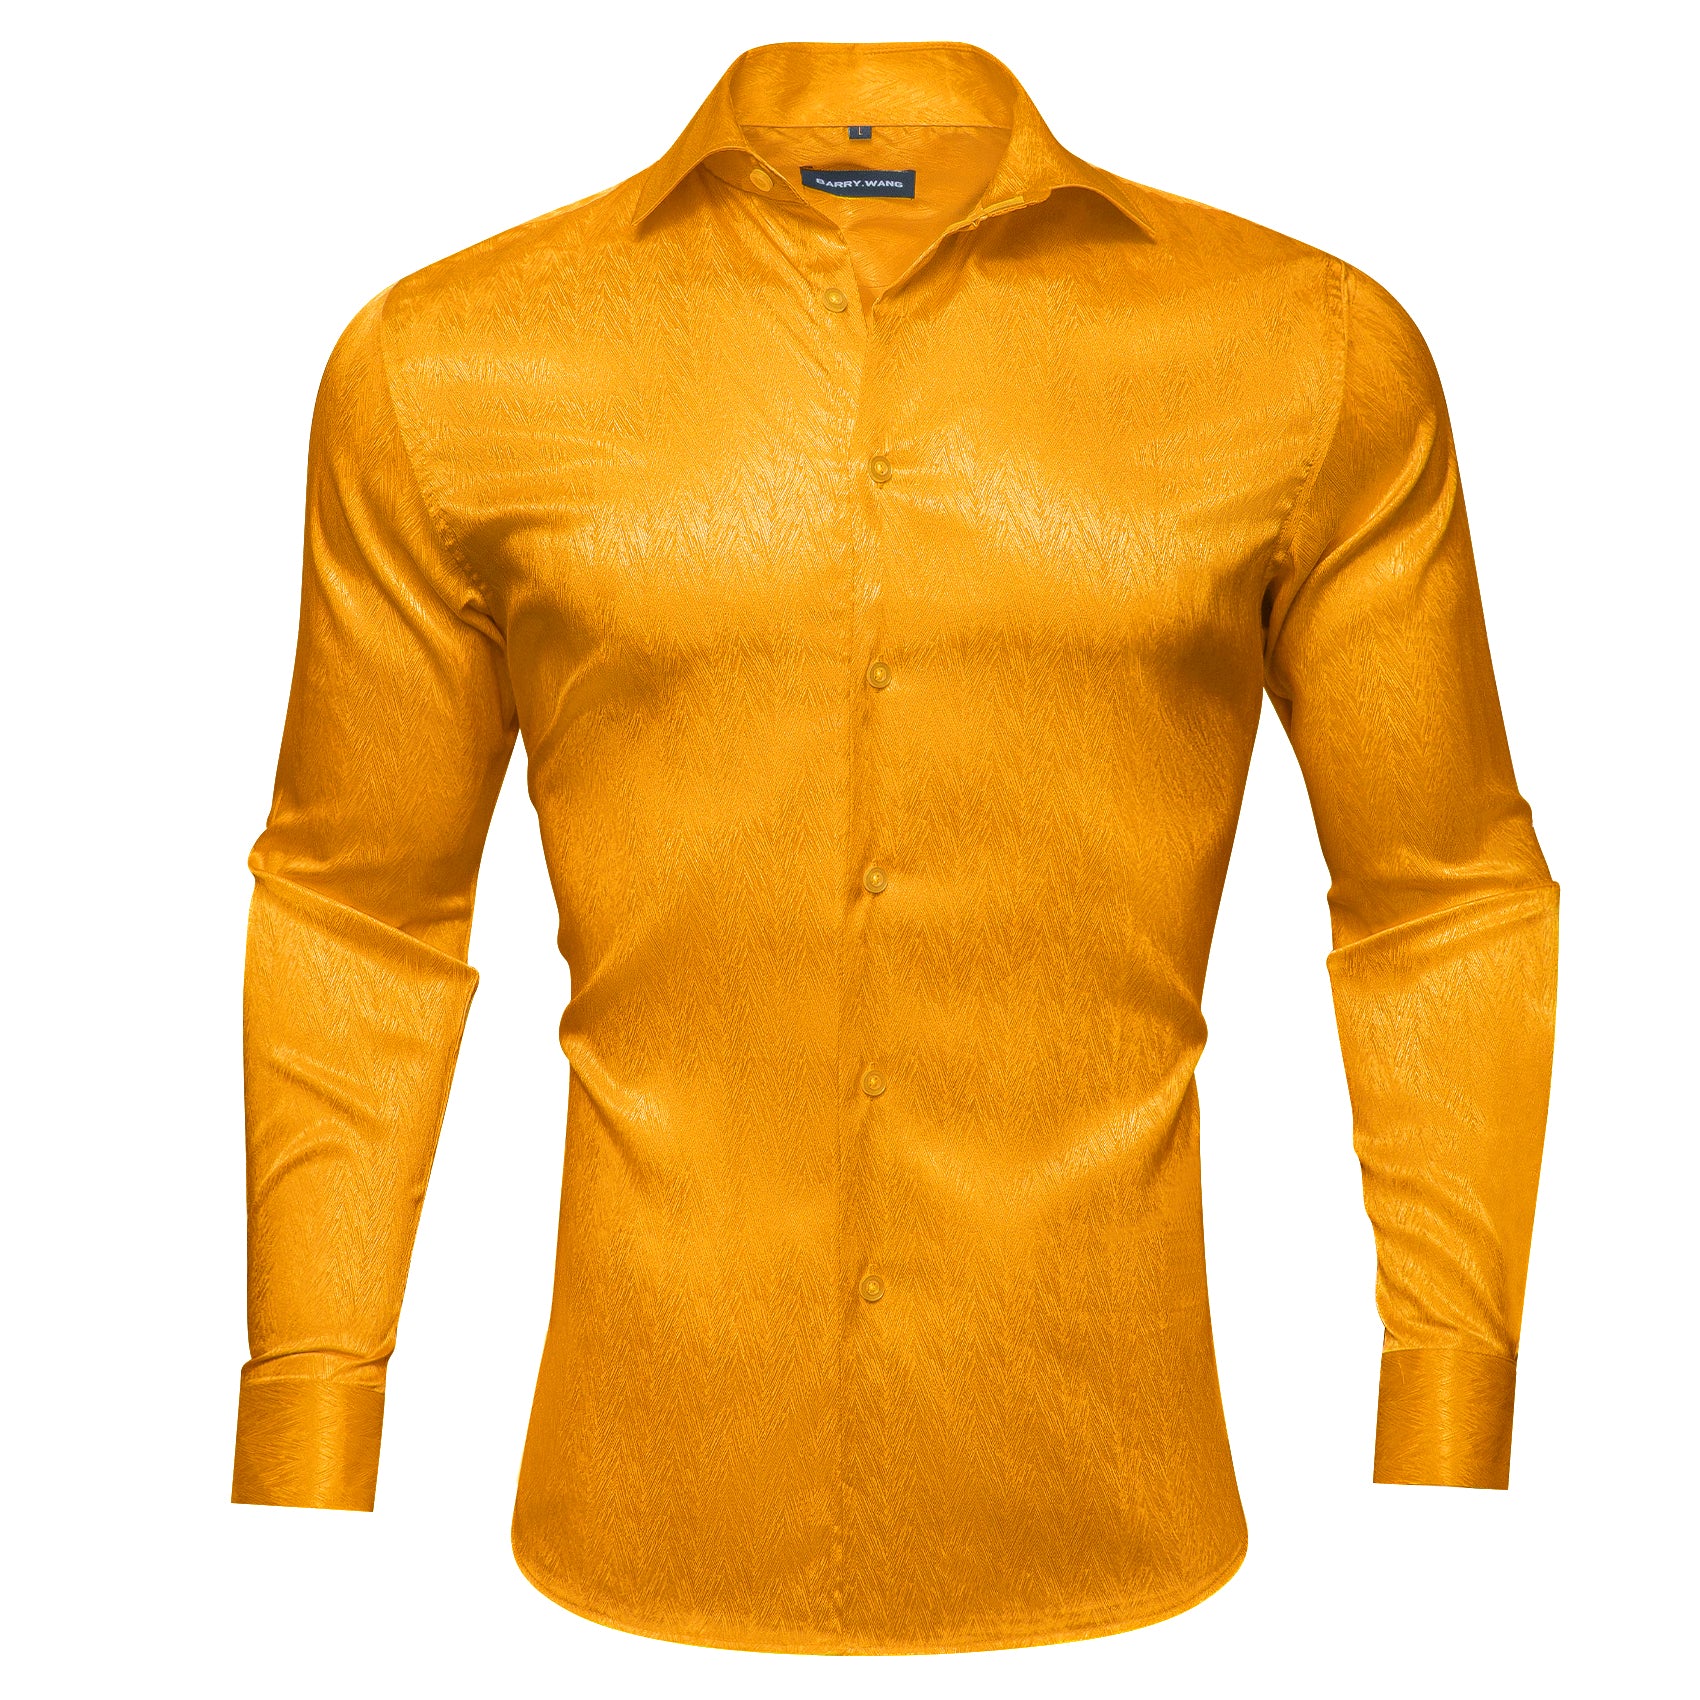 Barry.wang Fashion Gold Yellow Solid Silk Shirt